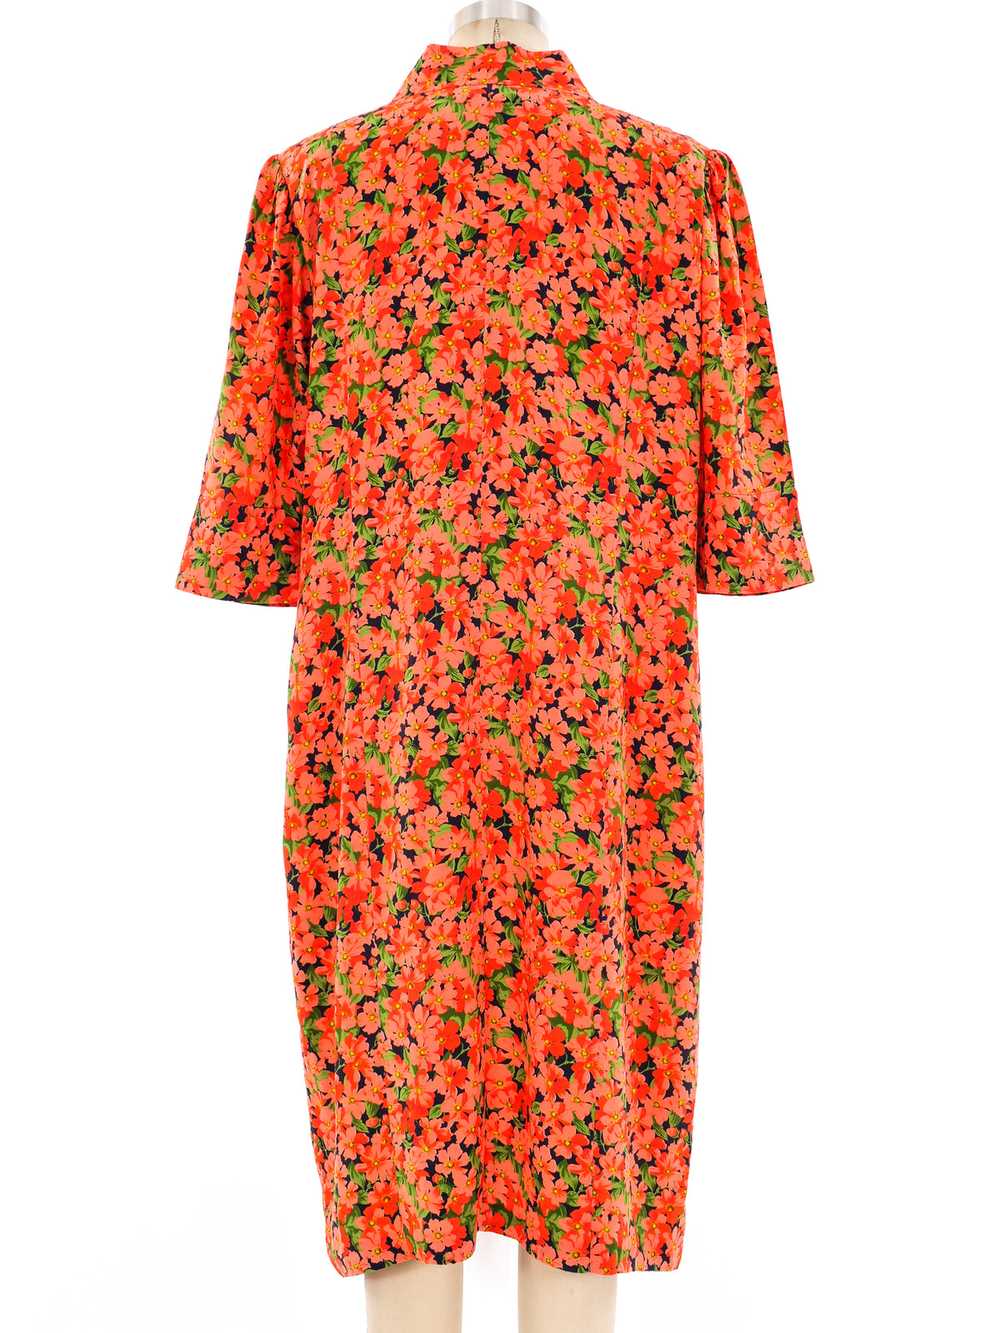 Yves Saint Laurent Floral Silk Dress - image 4